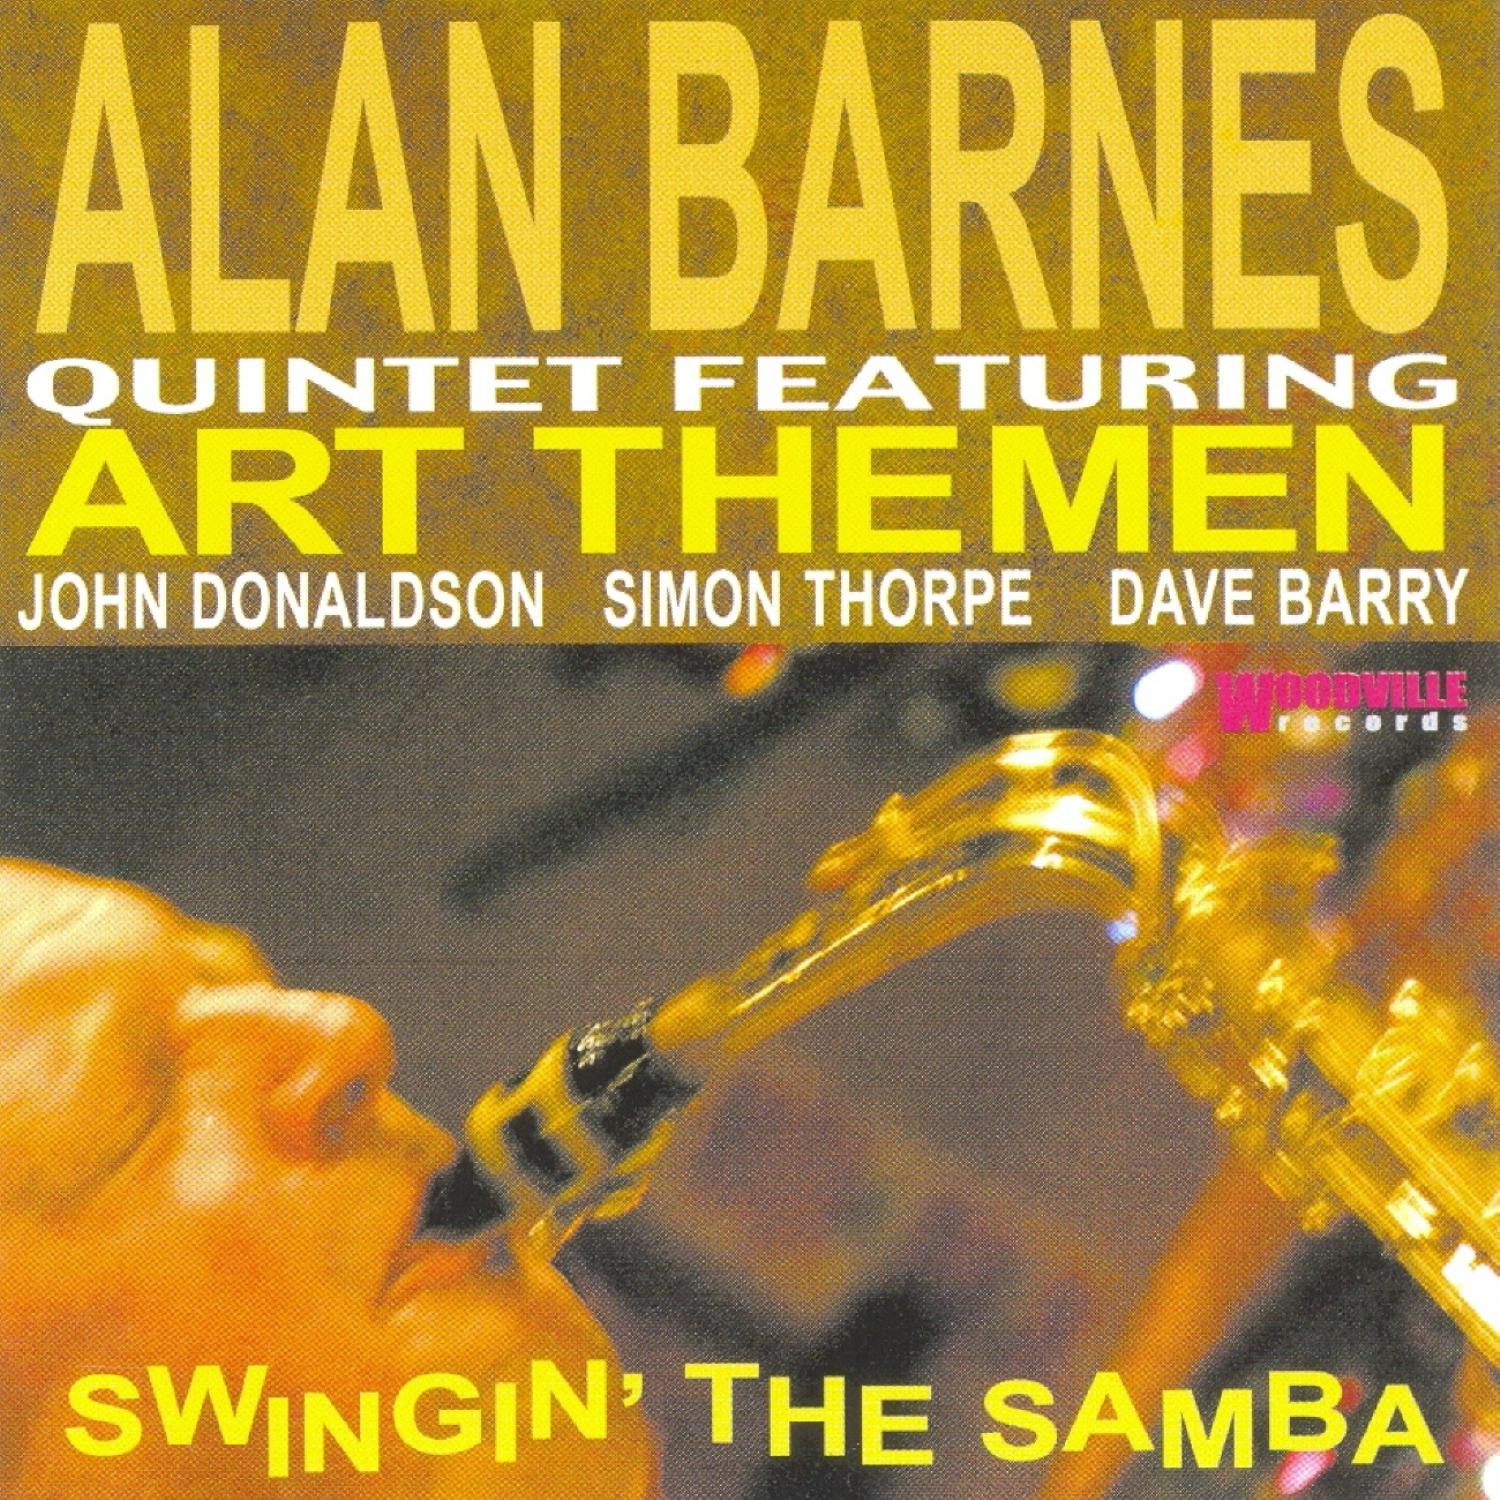 Alan Barnes Quintet - Chittlins Con Carne